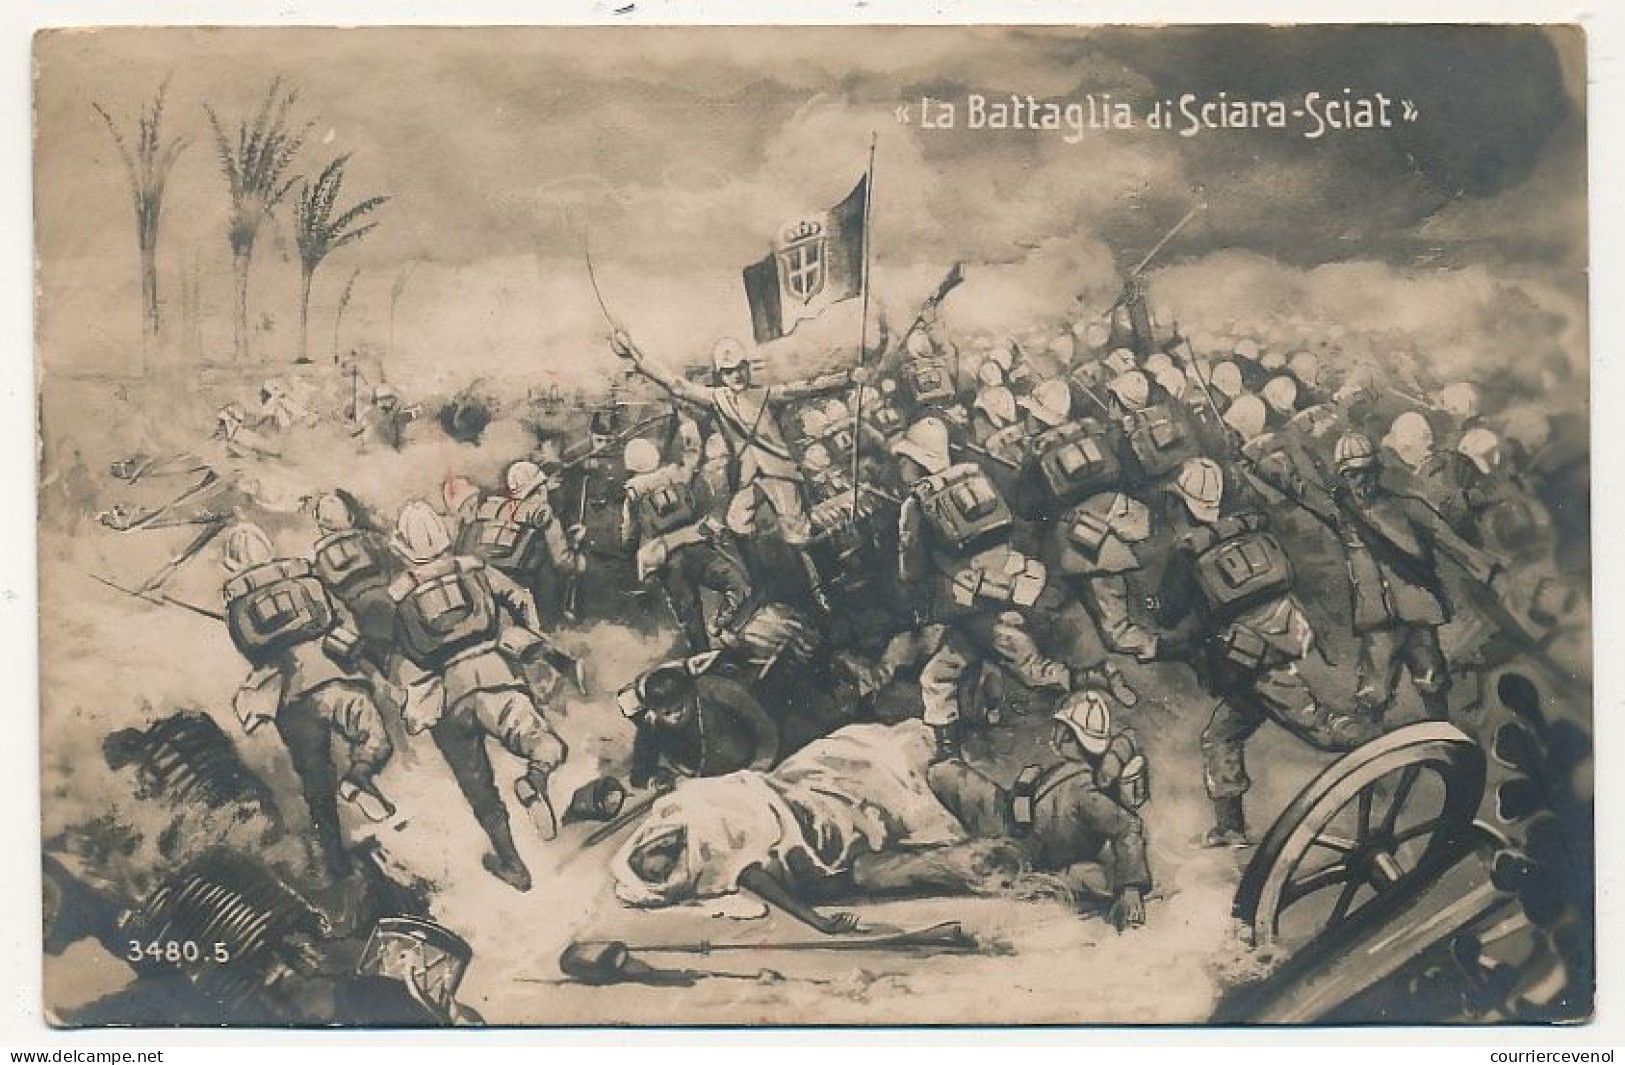 4 CPA - ITALIE / LYBIE - Scènes de la Guerre italo-turque, dont Bataille de Sciara-Sciat